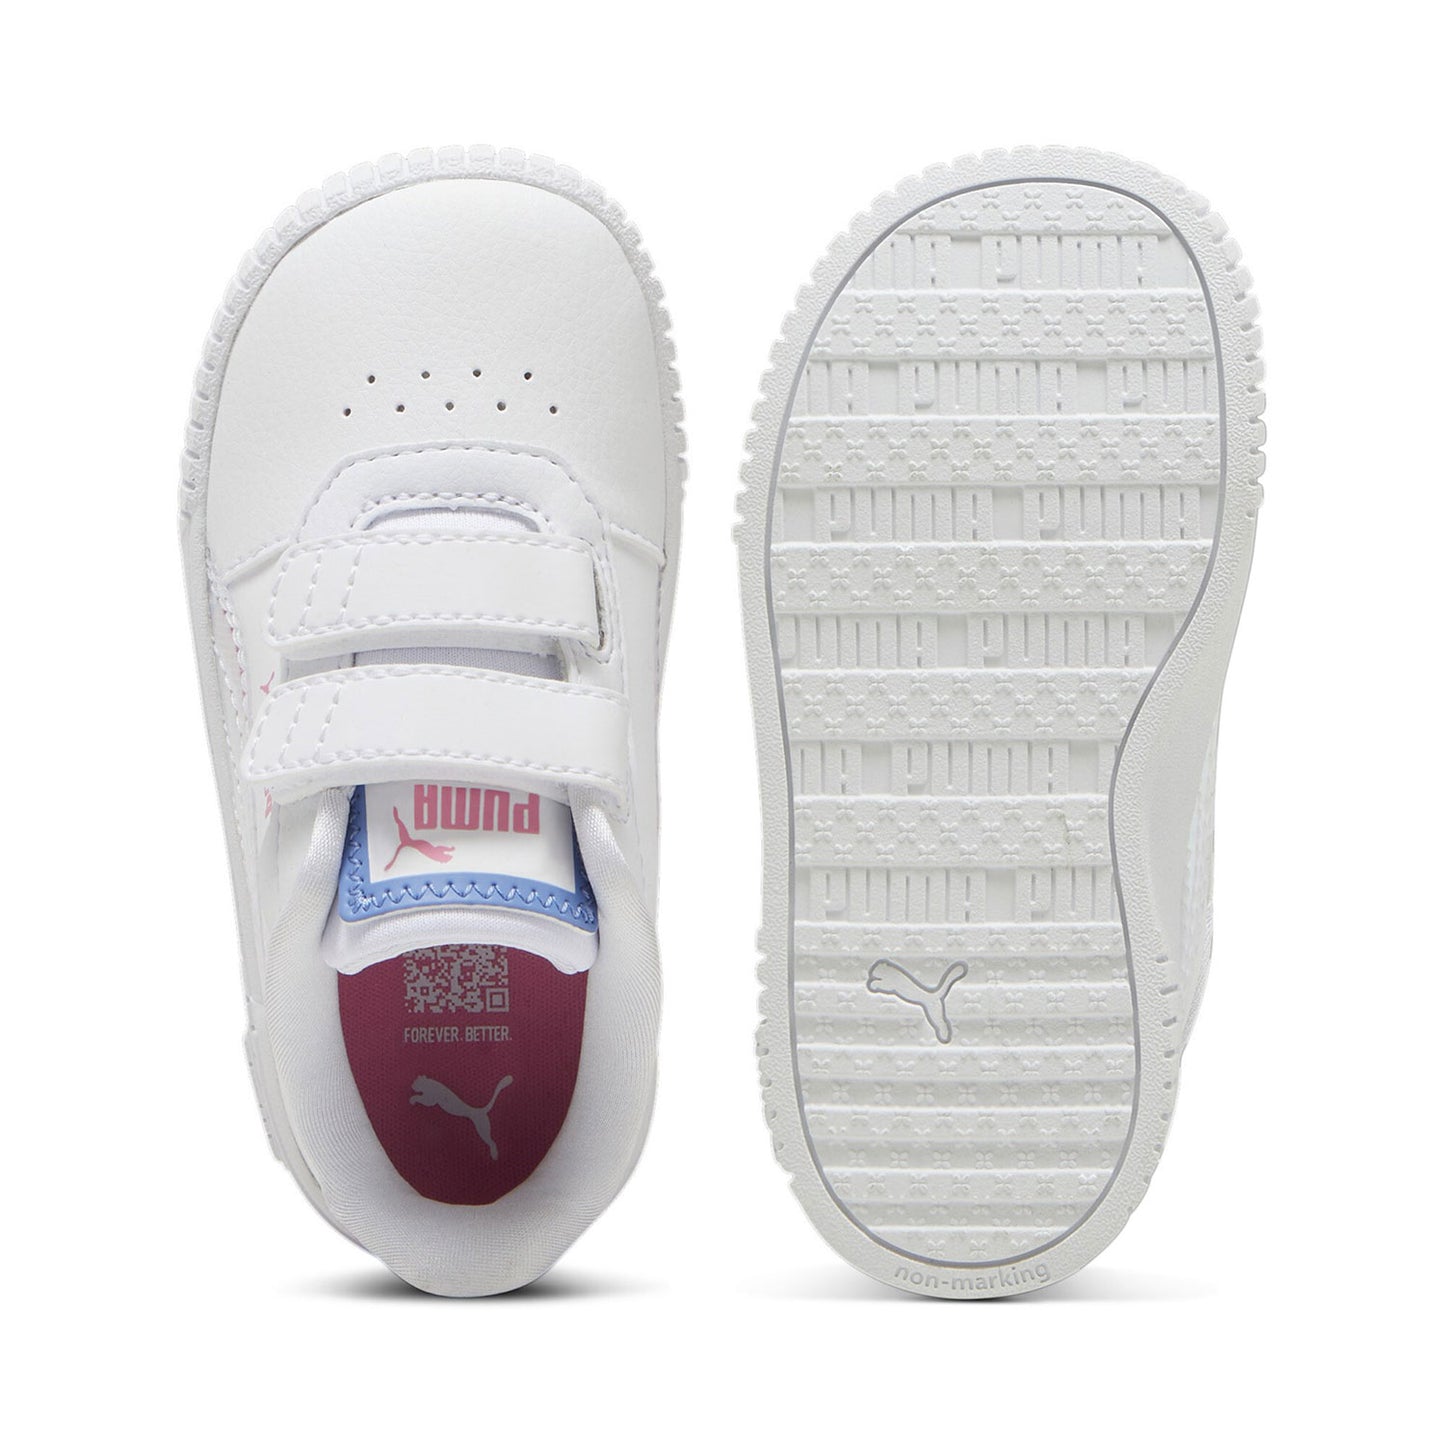 - PUMA Carina 2.0 Deep Diva V Infant Shoes WHITE / PINK - (39654801) - DDV - R1L10